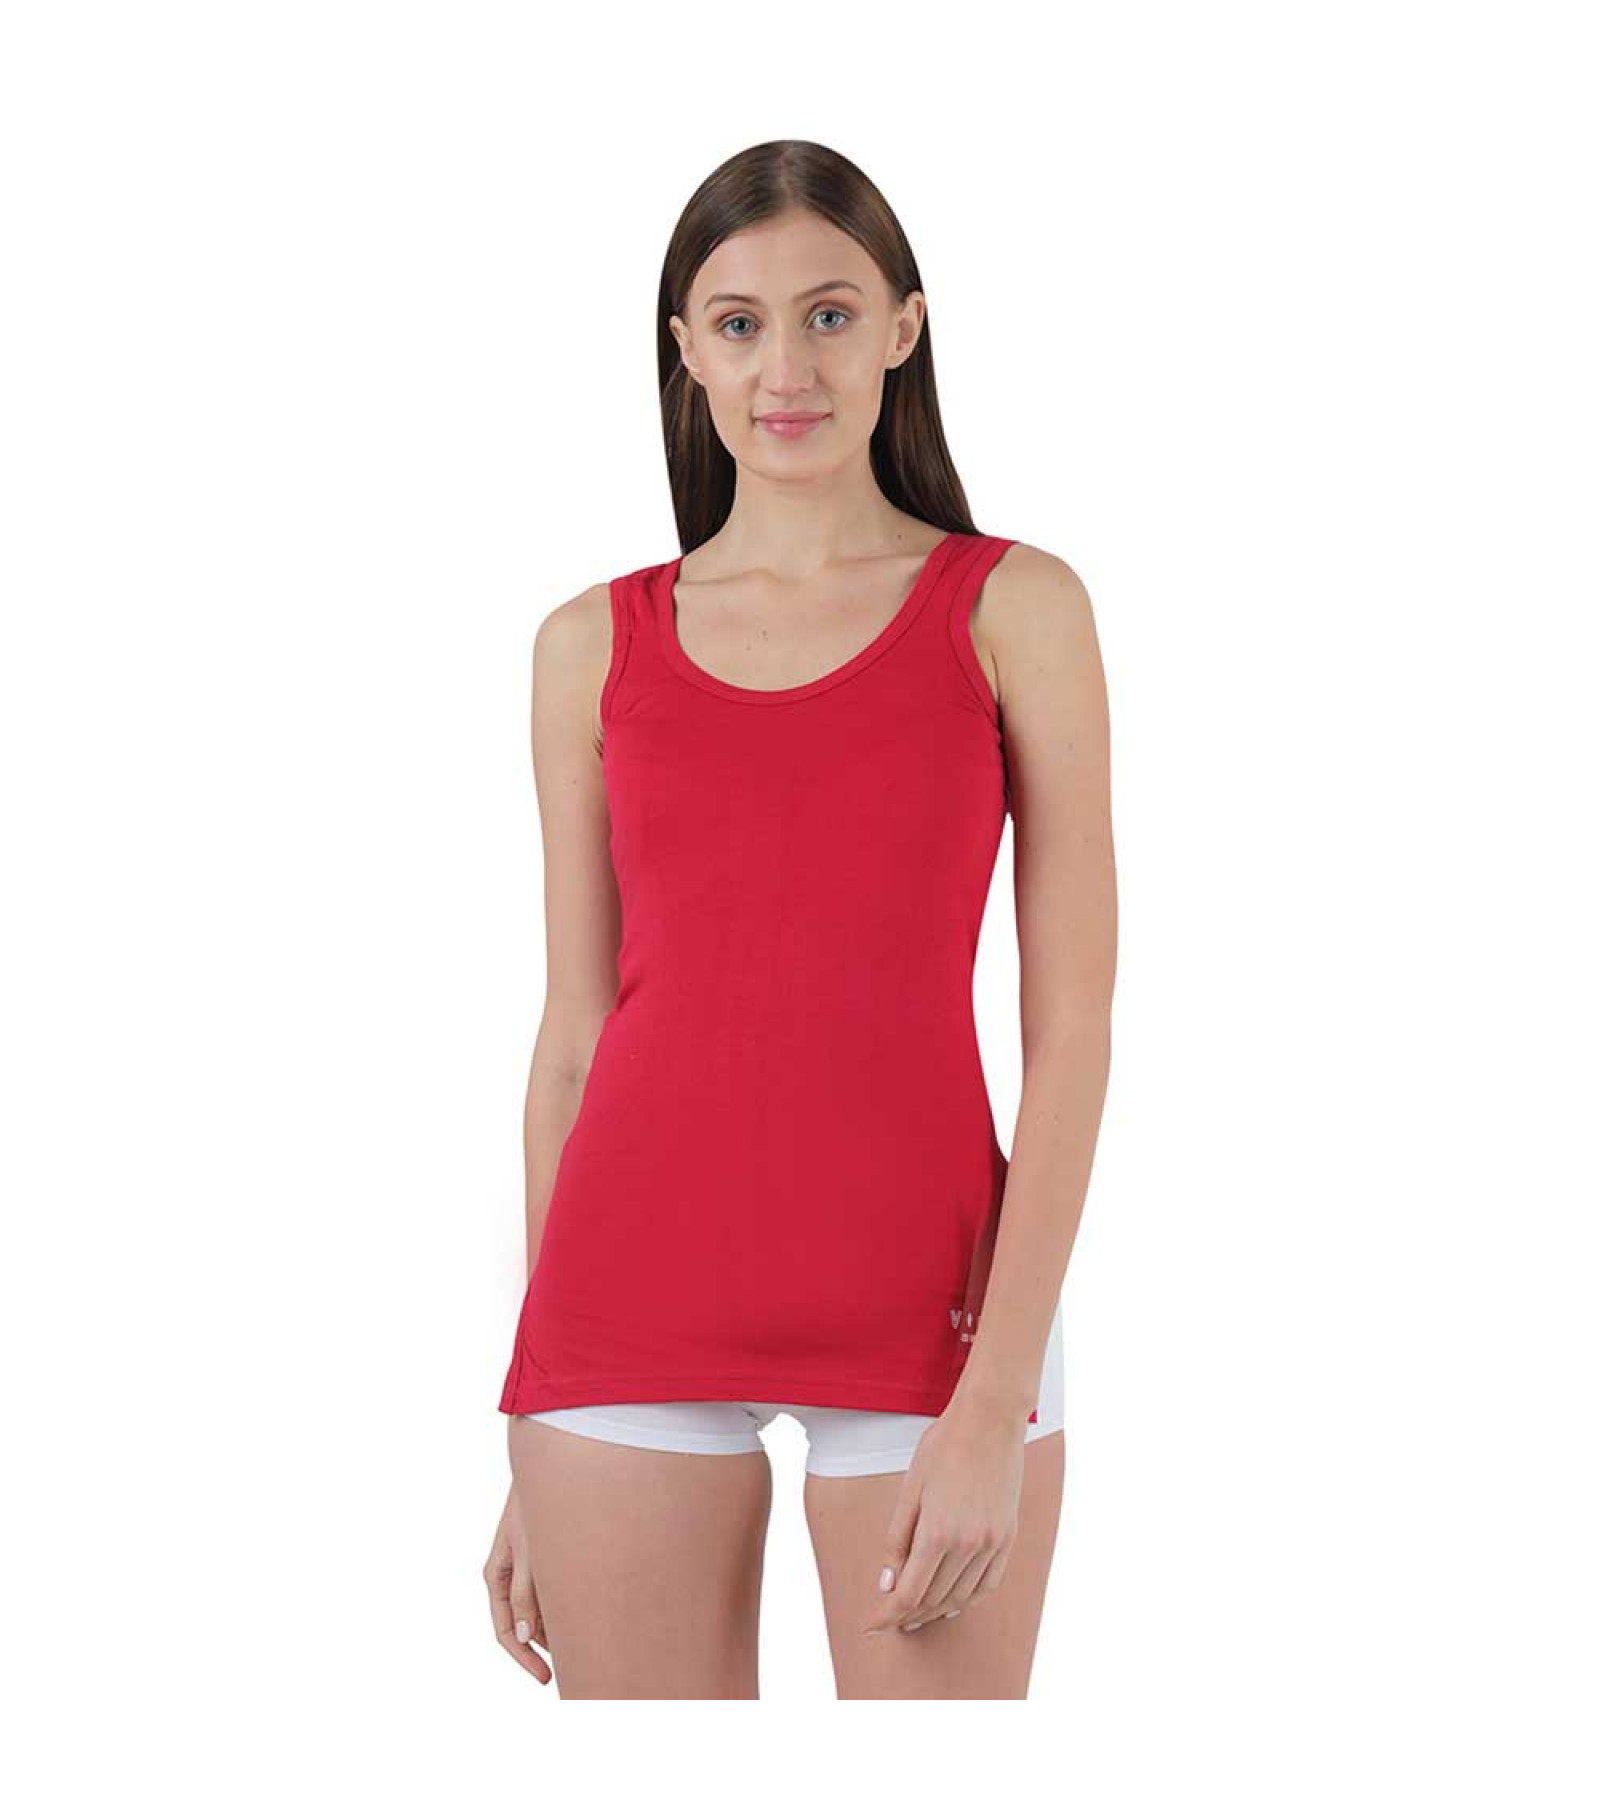 Vink Women's Cotton Camisole Red with U Neck